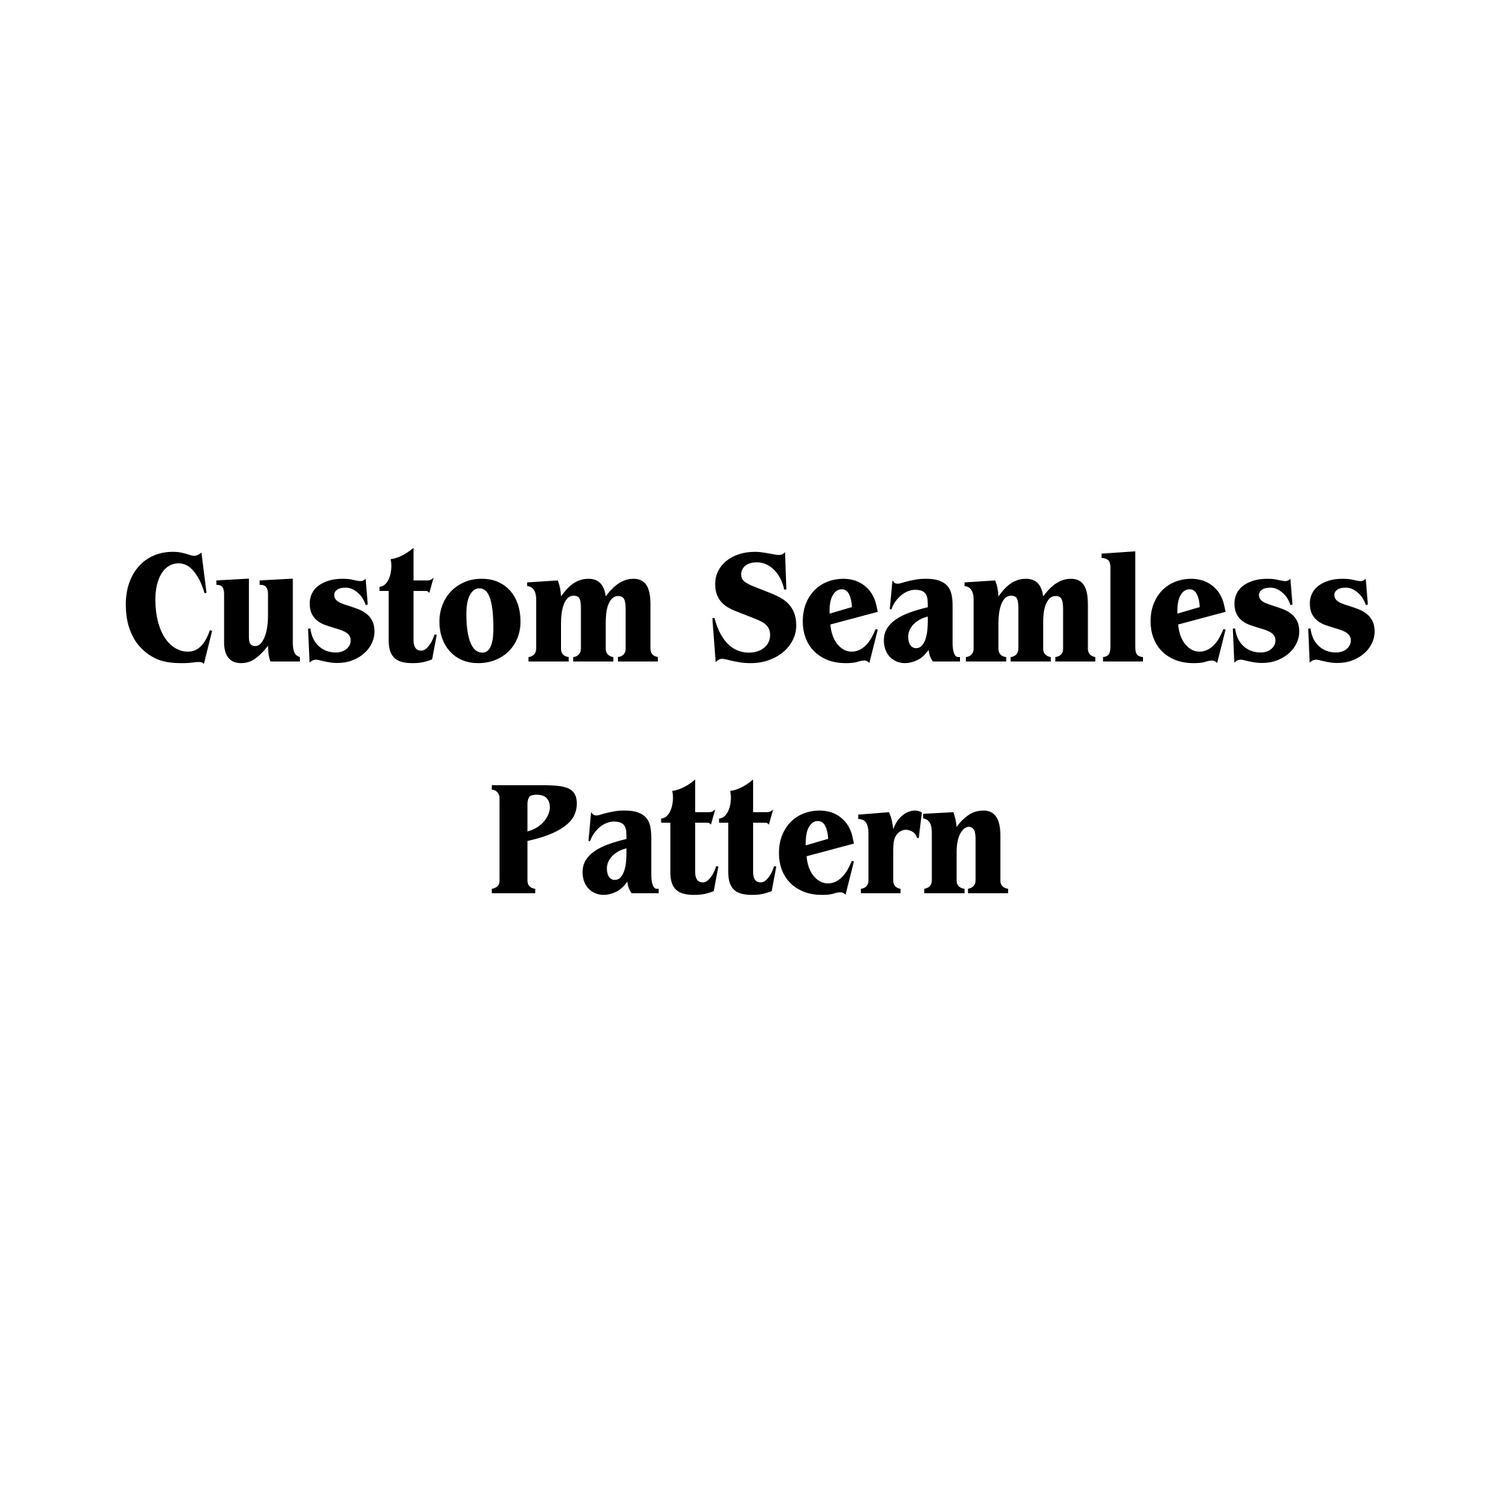 Custom Seamless Pattern Design by Skyy Designs Co. Professional pattern design custom services